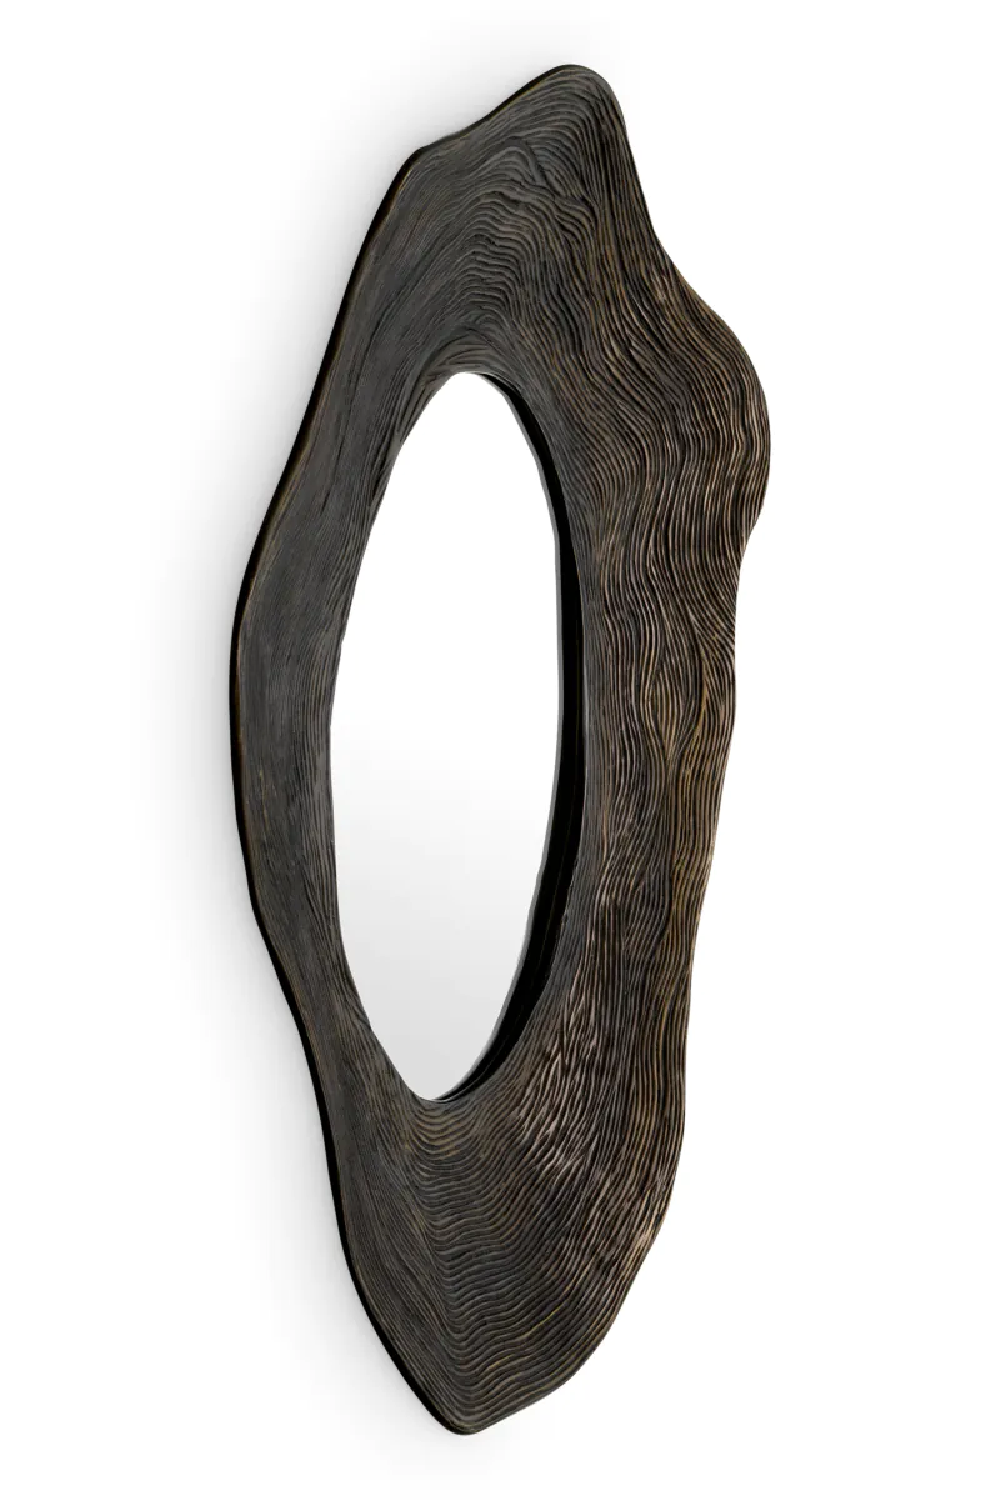 Organic-Shaped Mirror | Eichholtz Pavona | Oroa.com